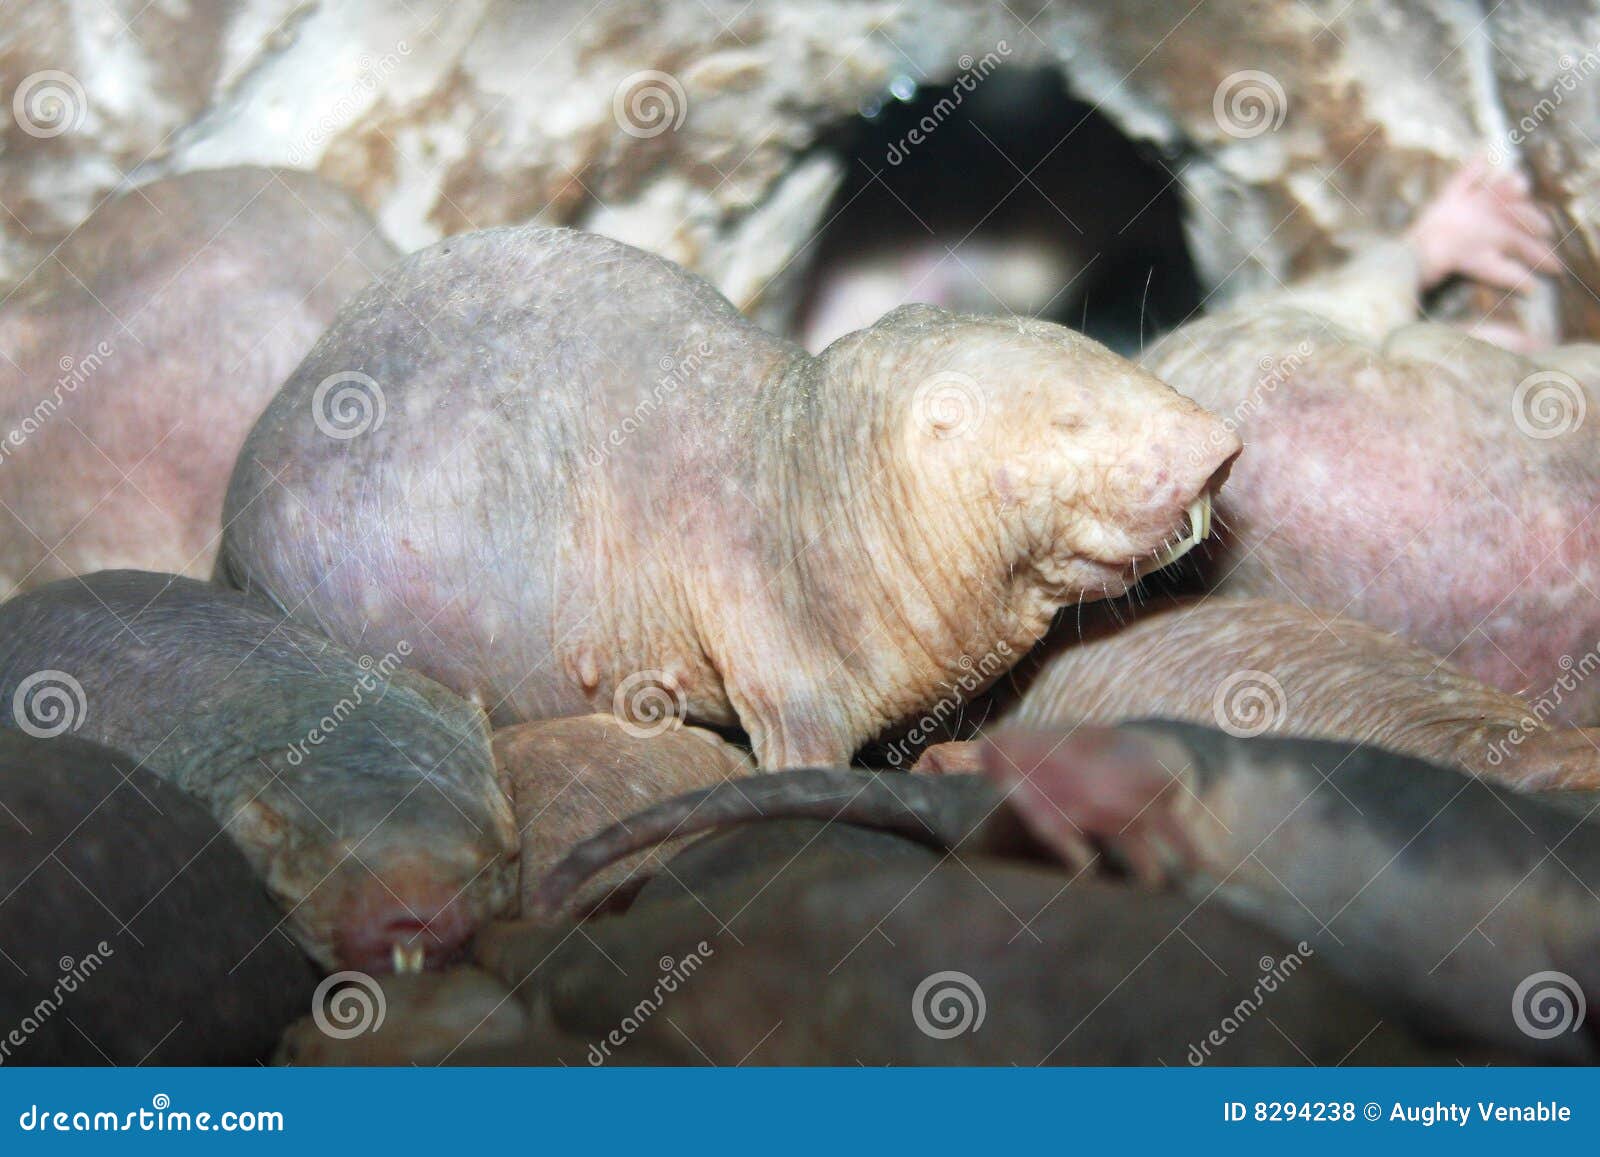 naked mole-rats